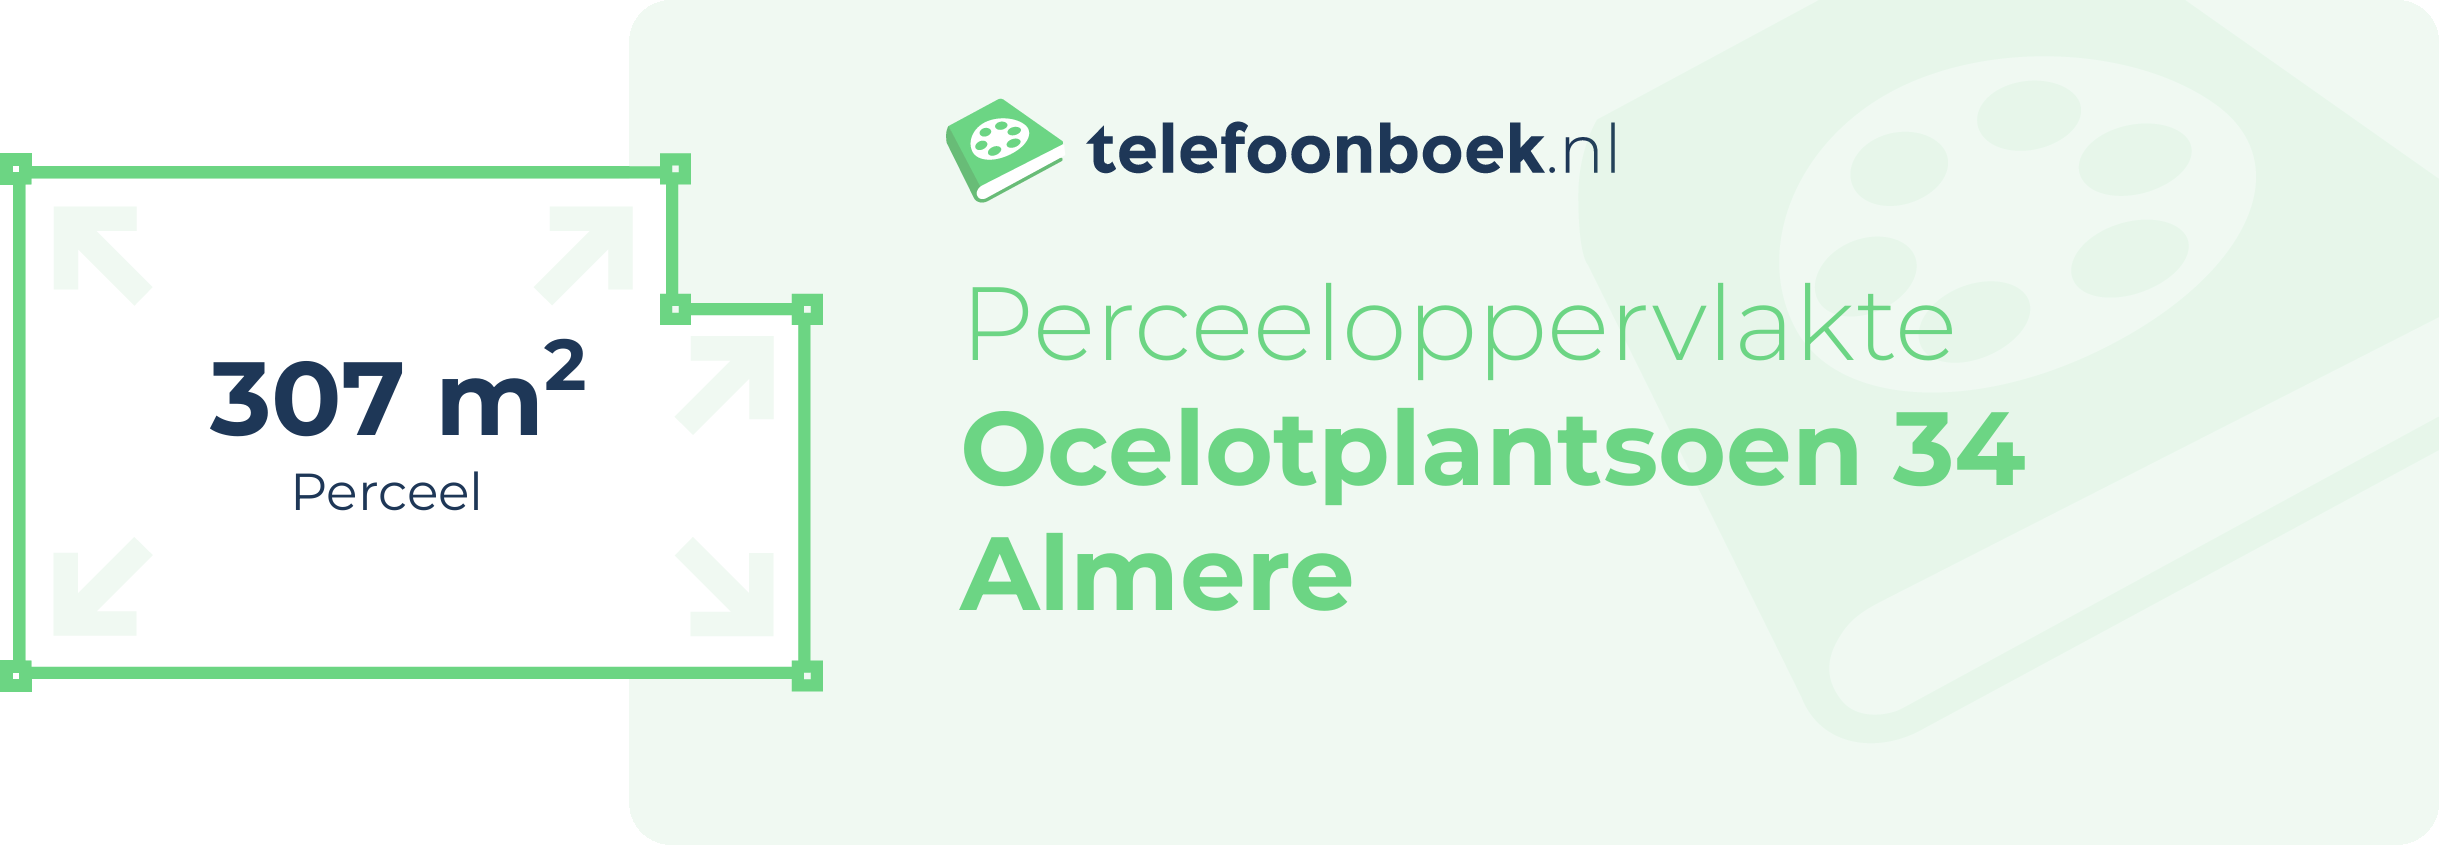 Perceeloppervlakte Ocelotplantsoen 34 Almere